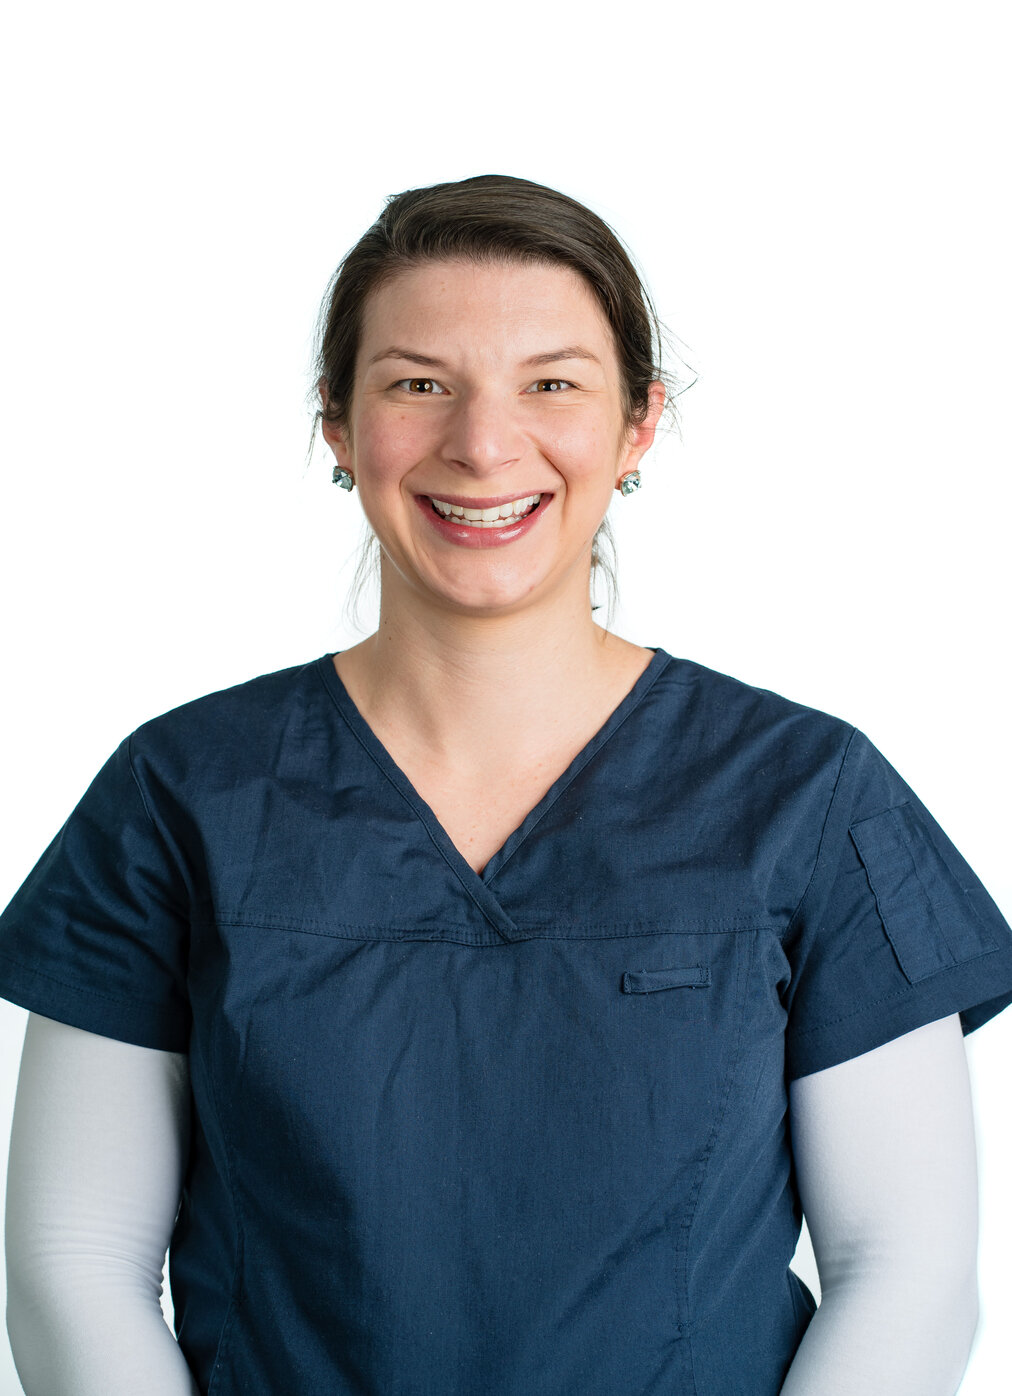 Dr. Jessica Lawford's profile photo.